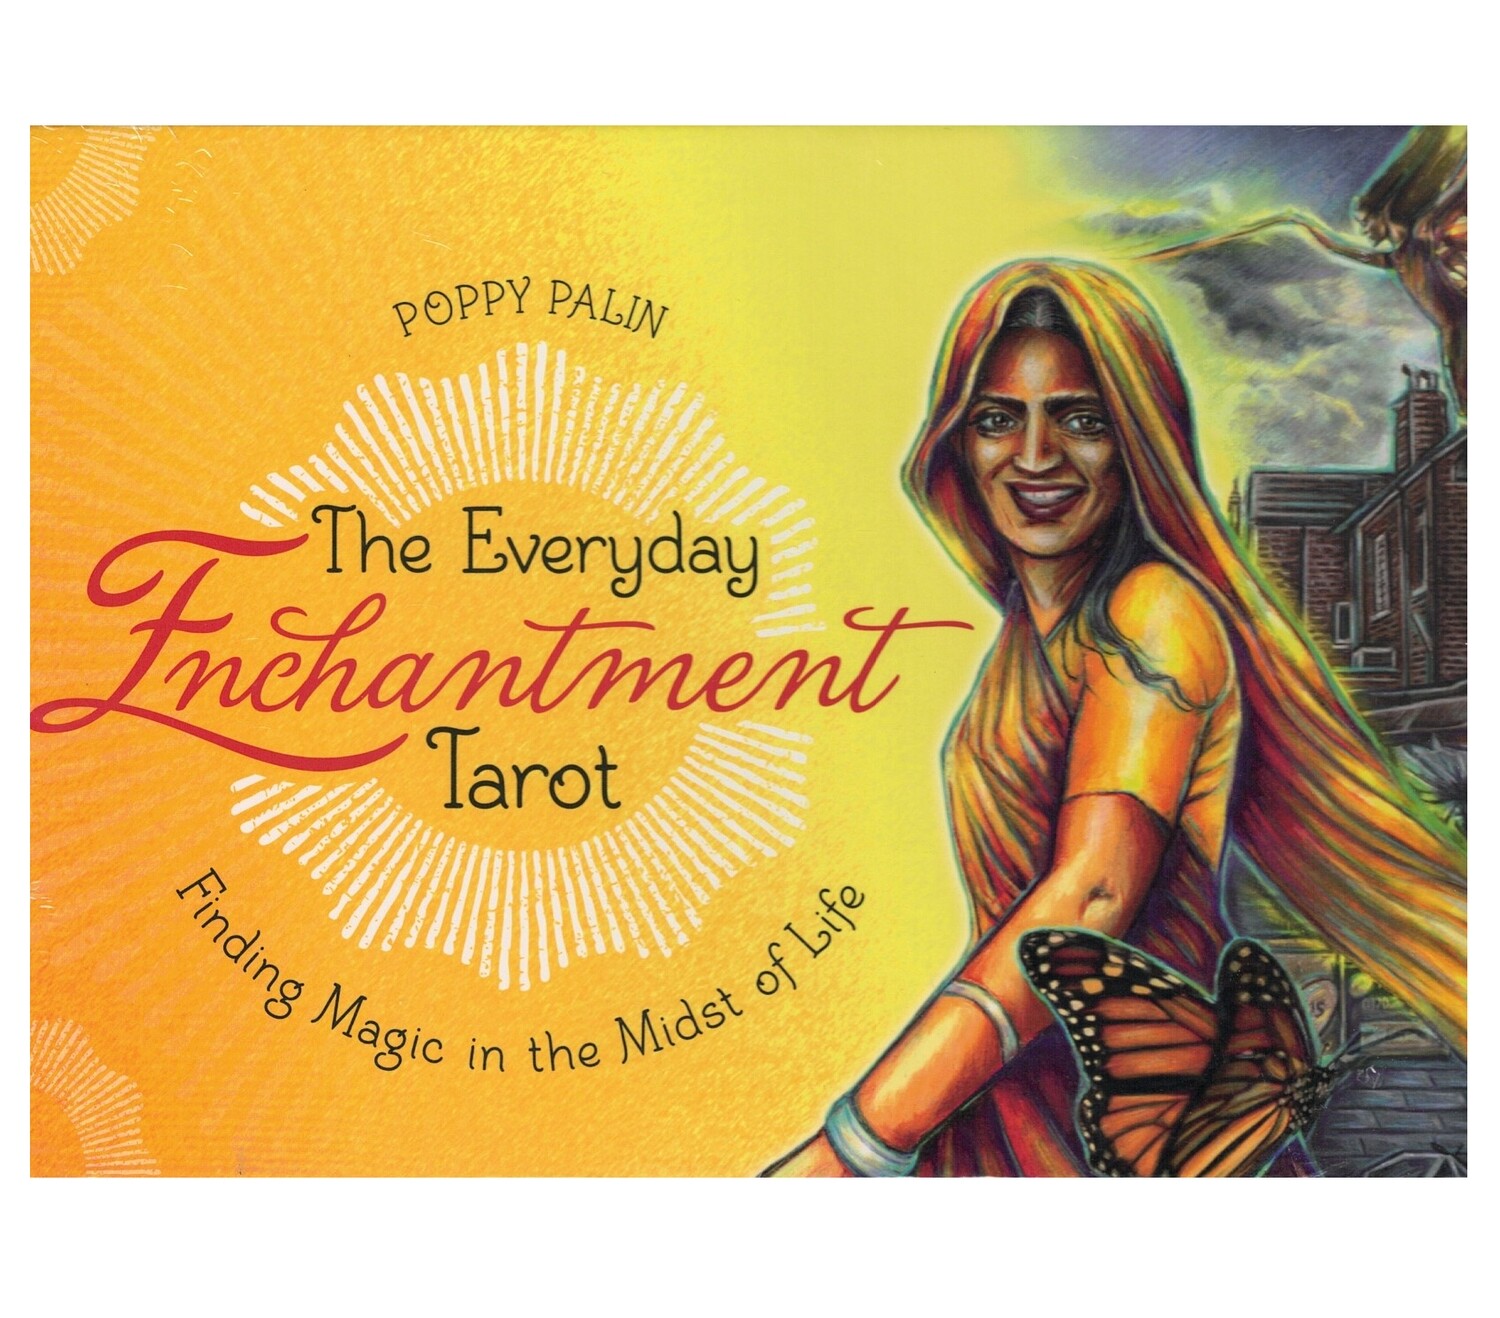 The Everyday Enchantement Tarot